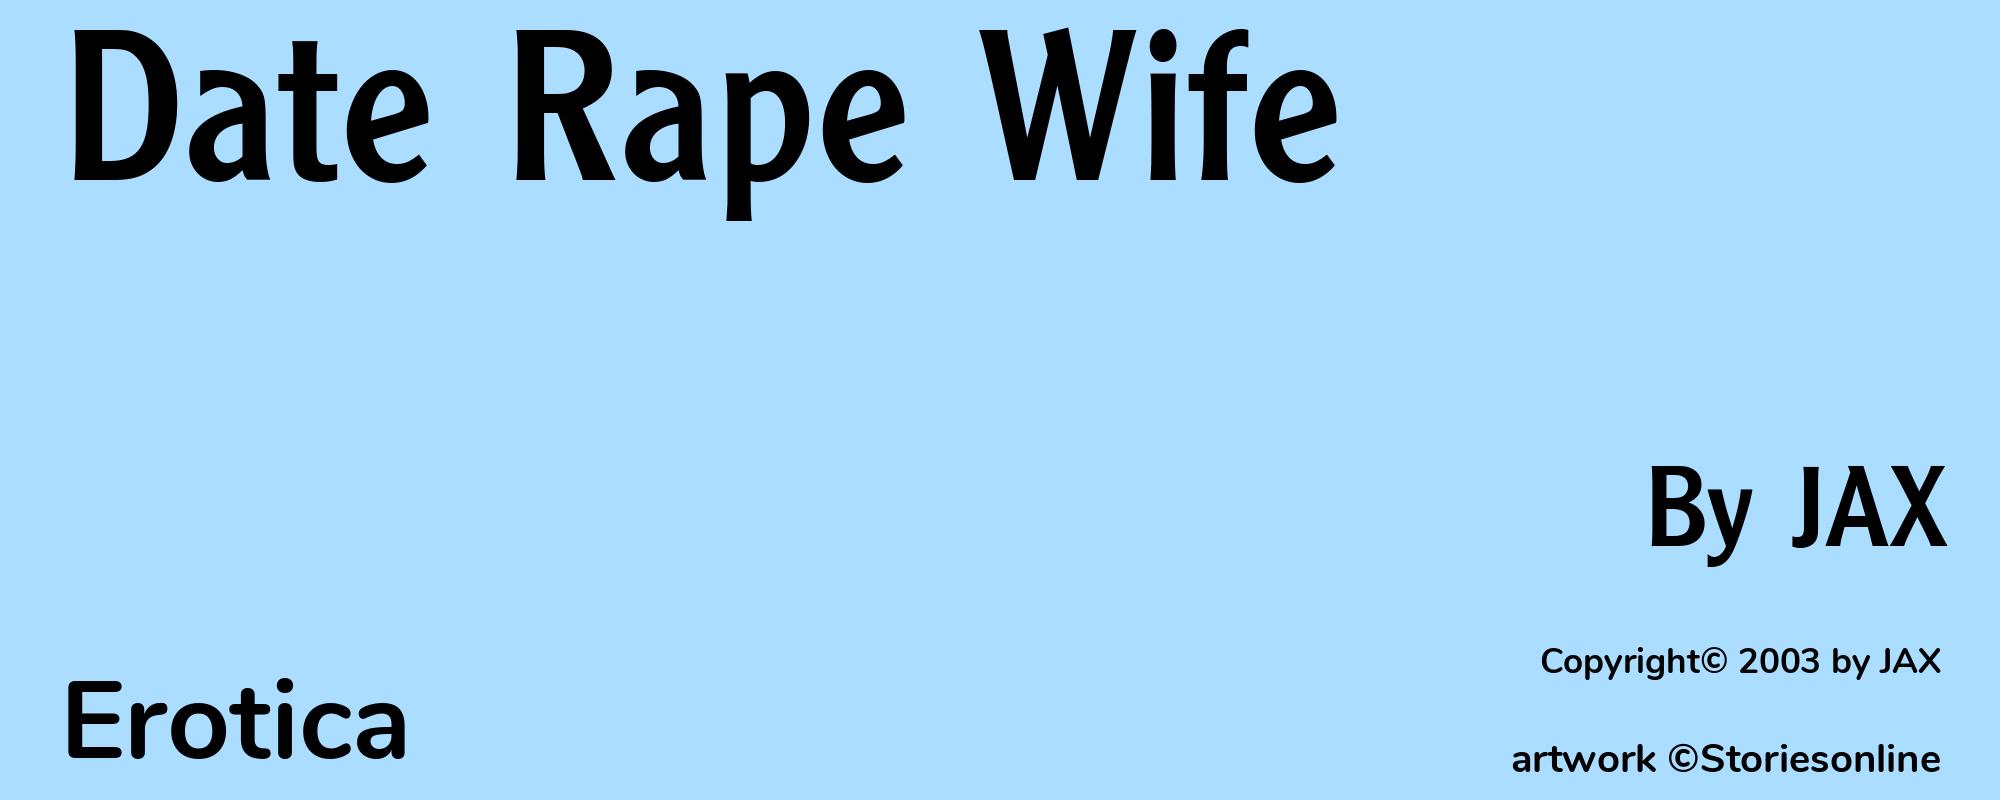 Date Rape Wife - Cover